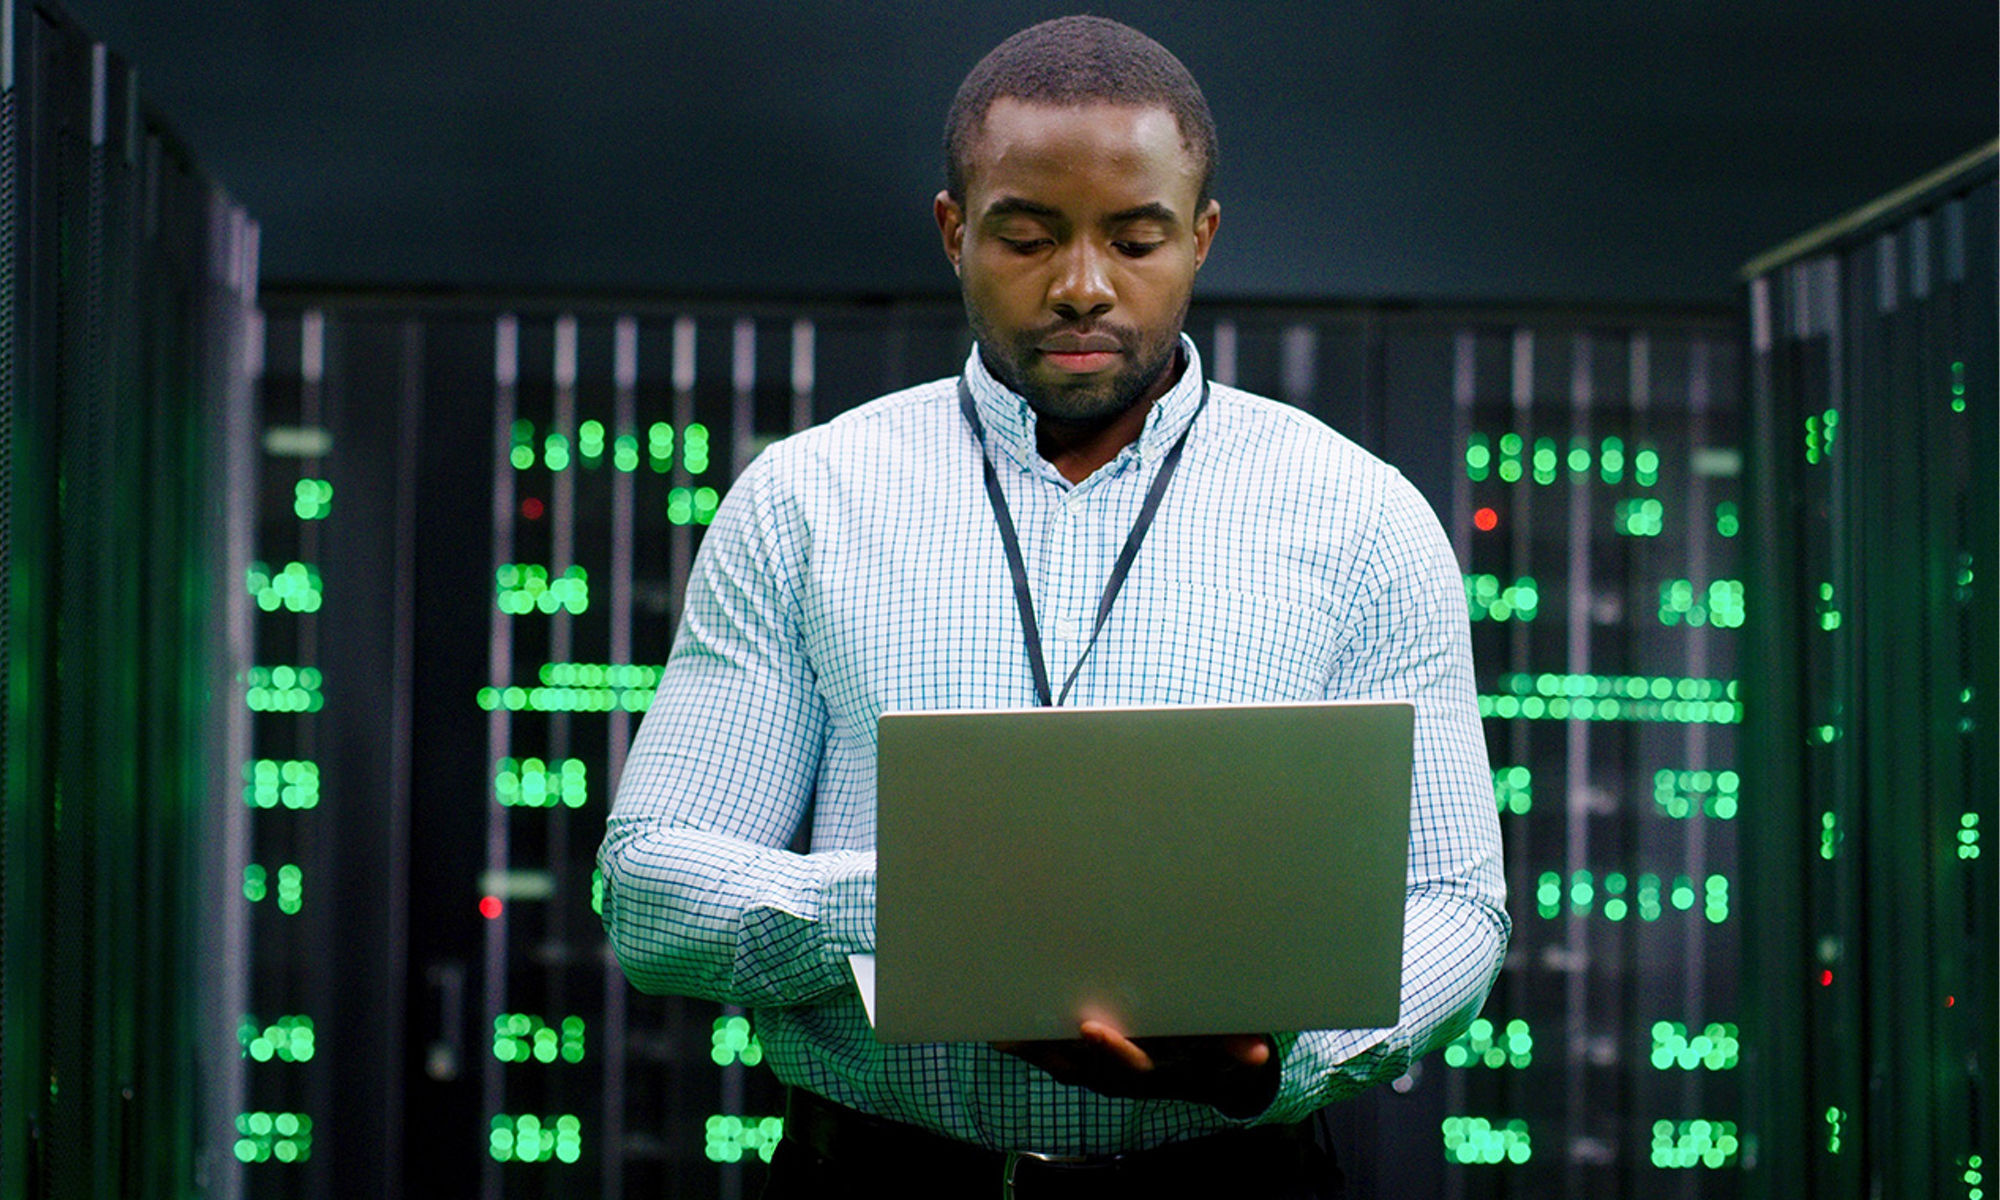 man using laptop in a data center server room